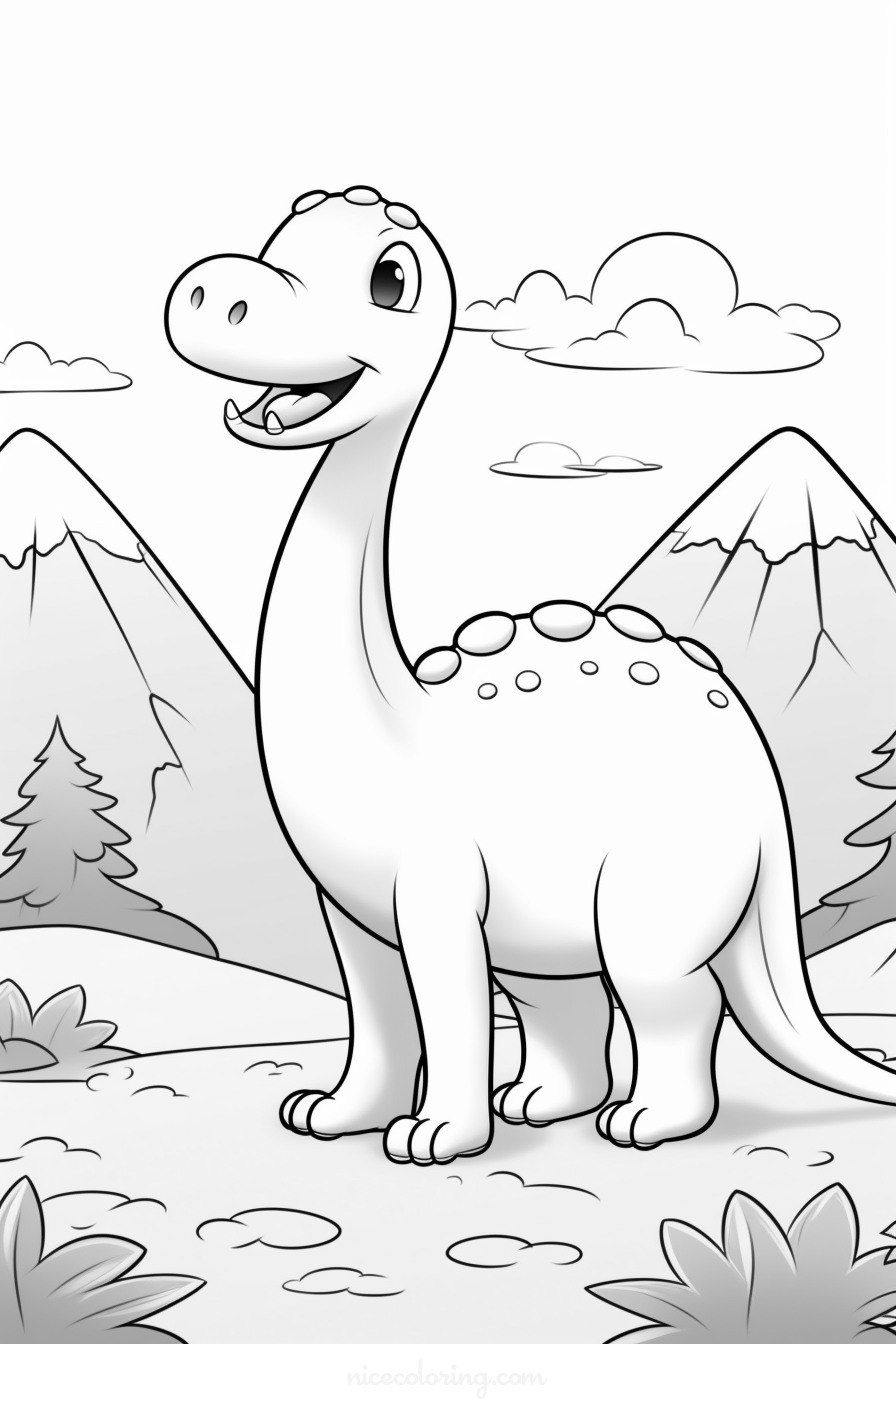 Tyrannosaurus Rex in a lush prehistoric world